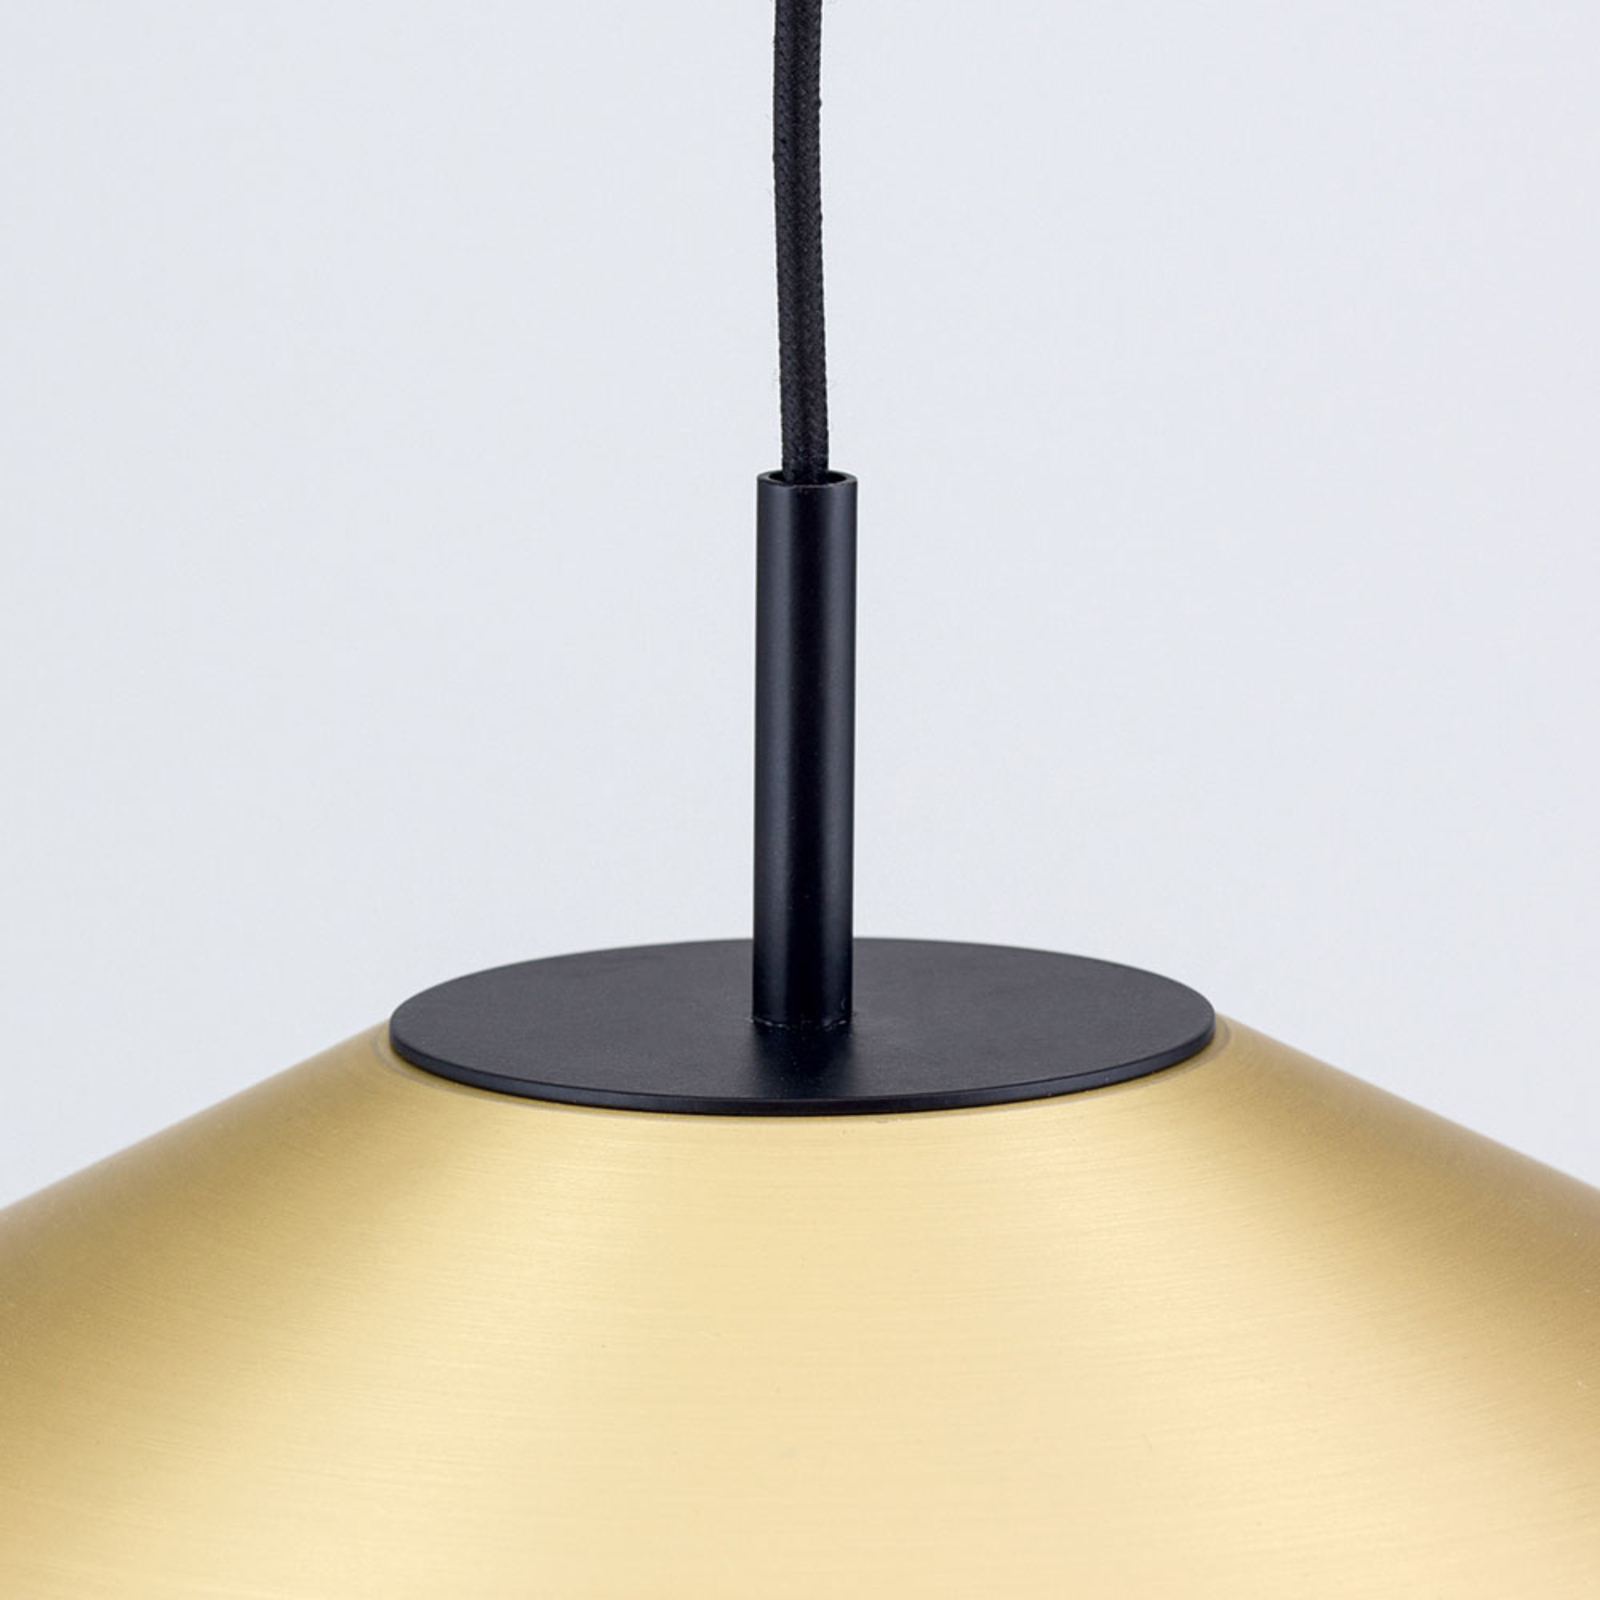 Gourmet LED pendant light, matt brass lampshade